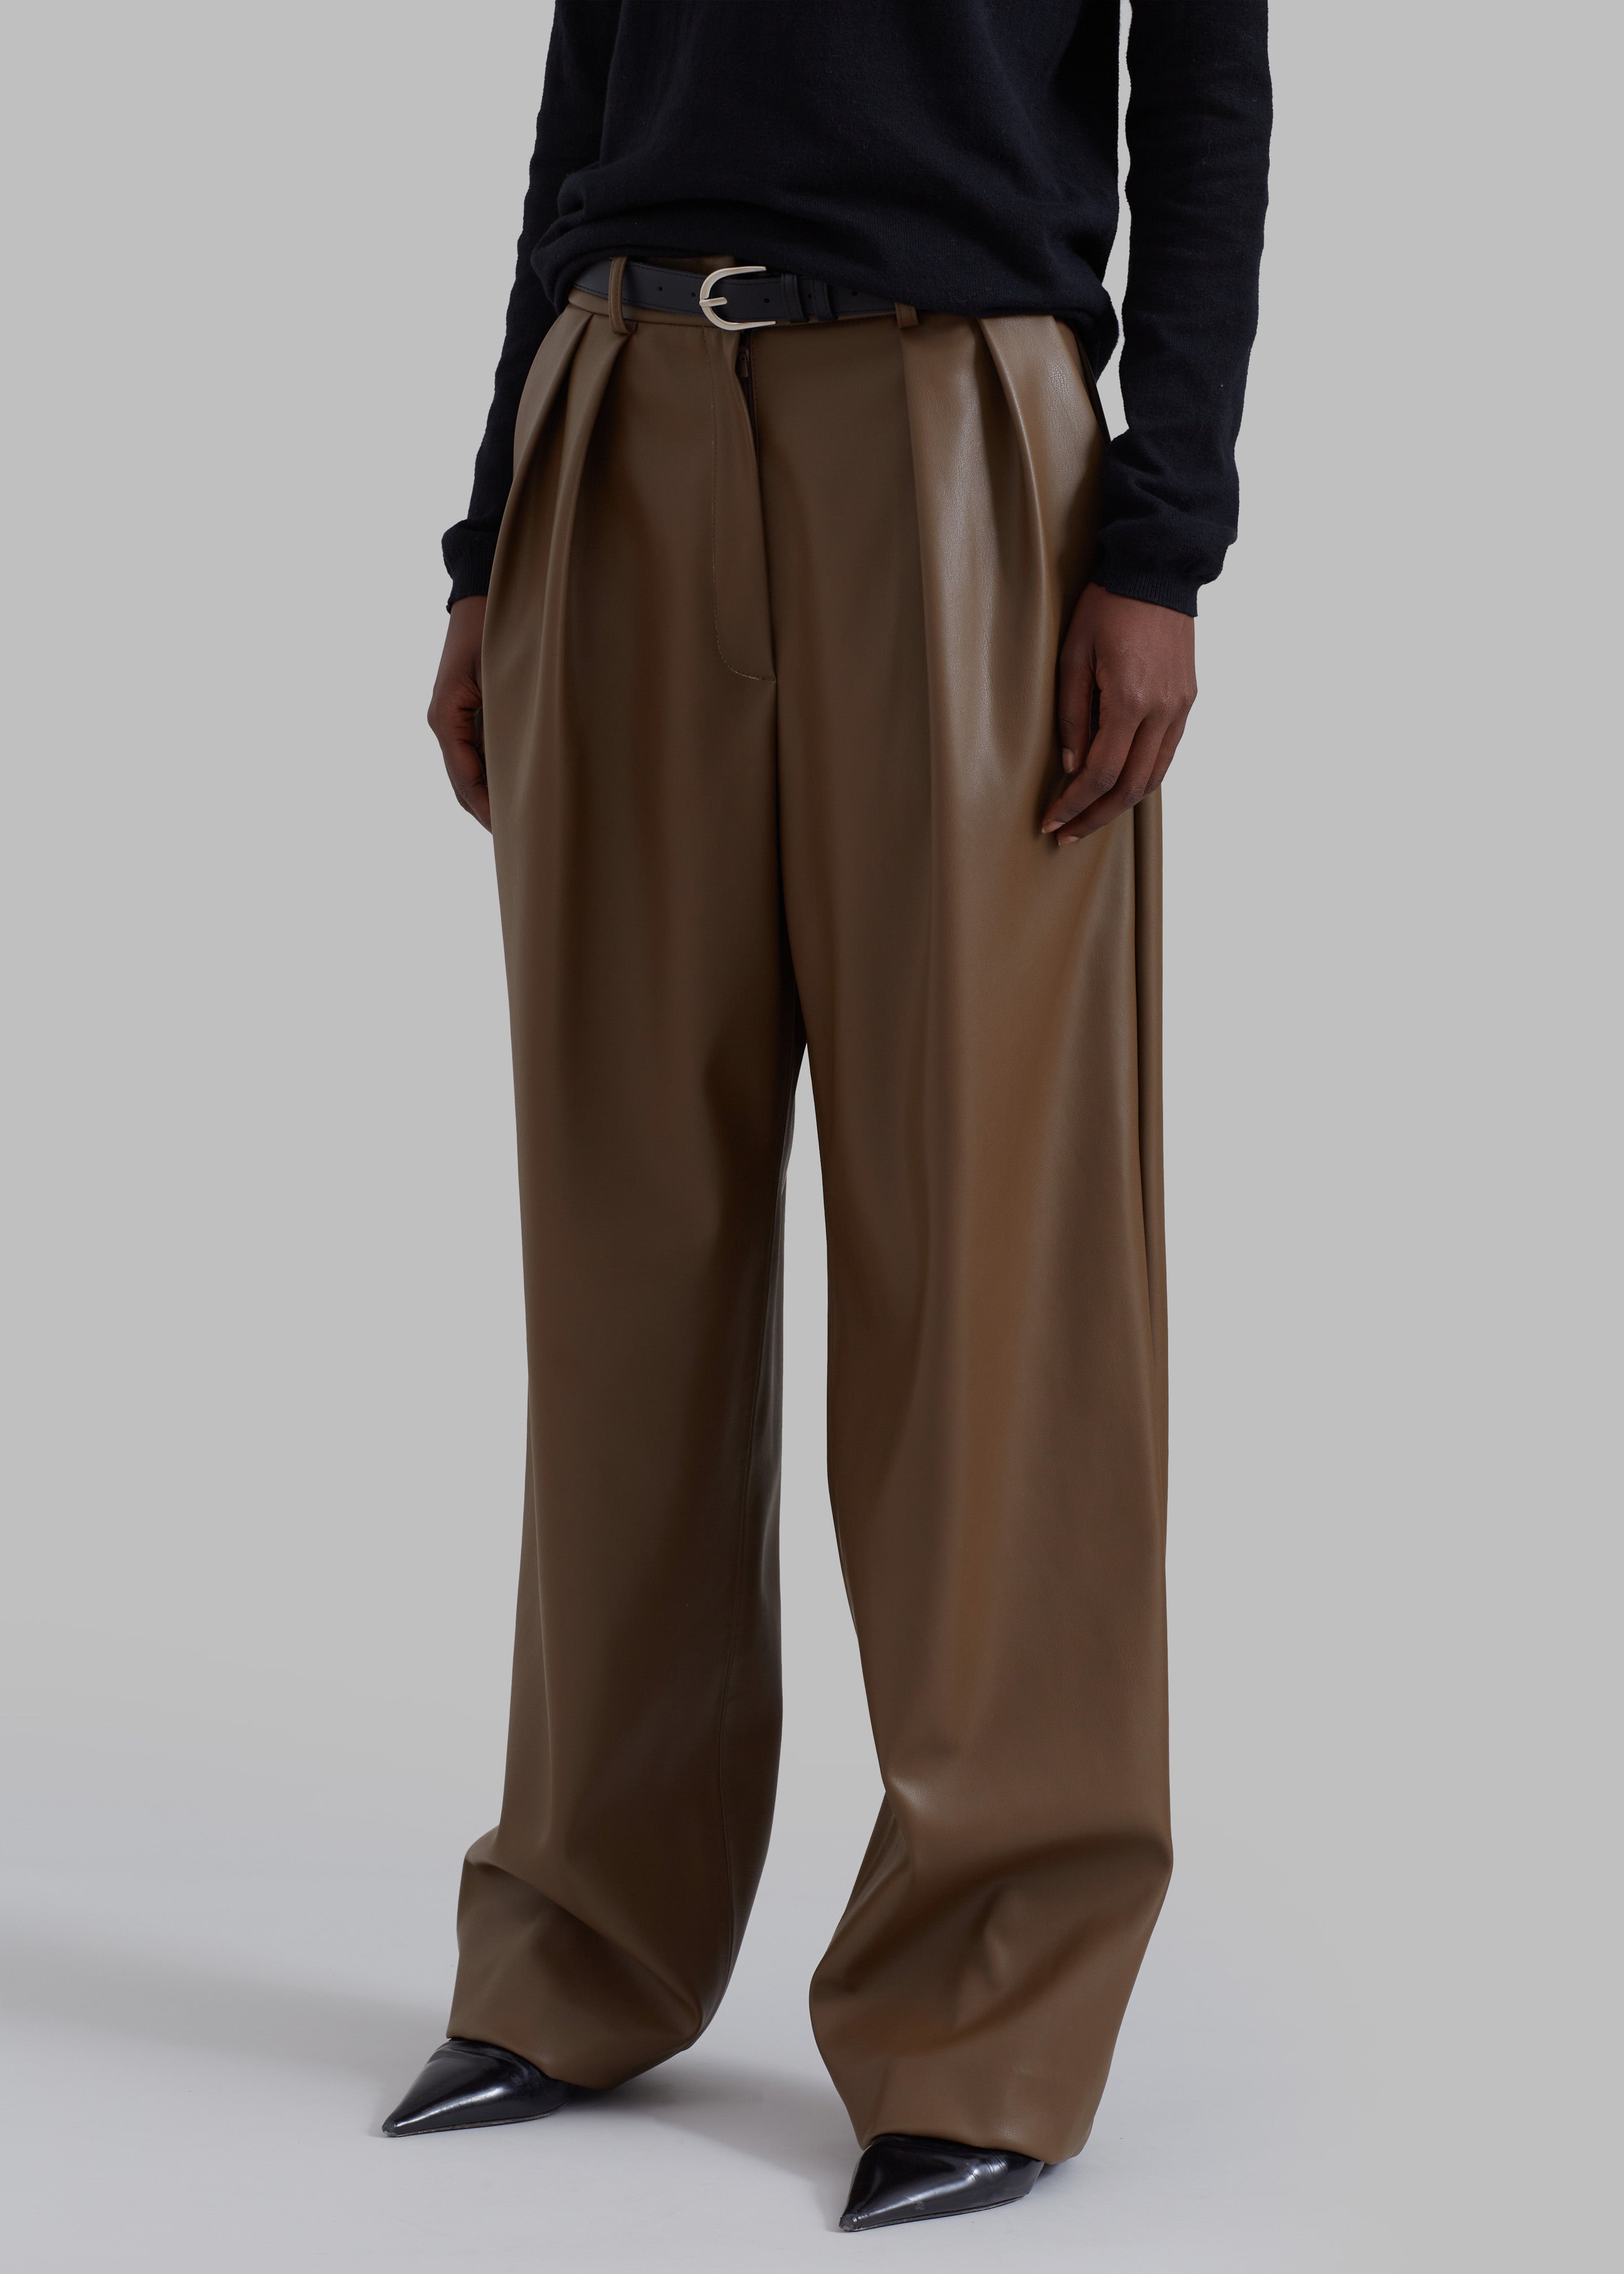 Tranton Faux Leather Pants - Brown - 4